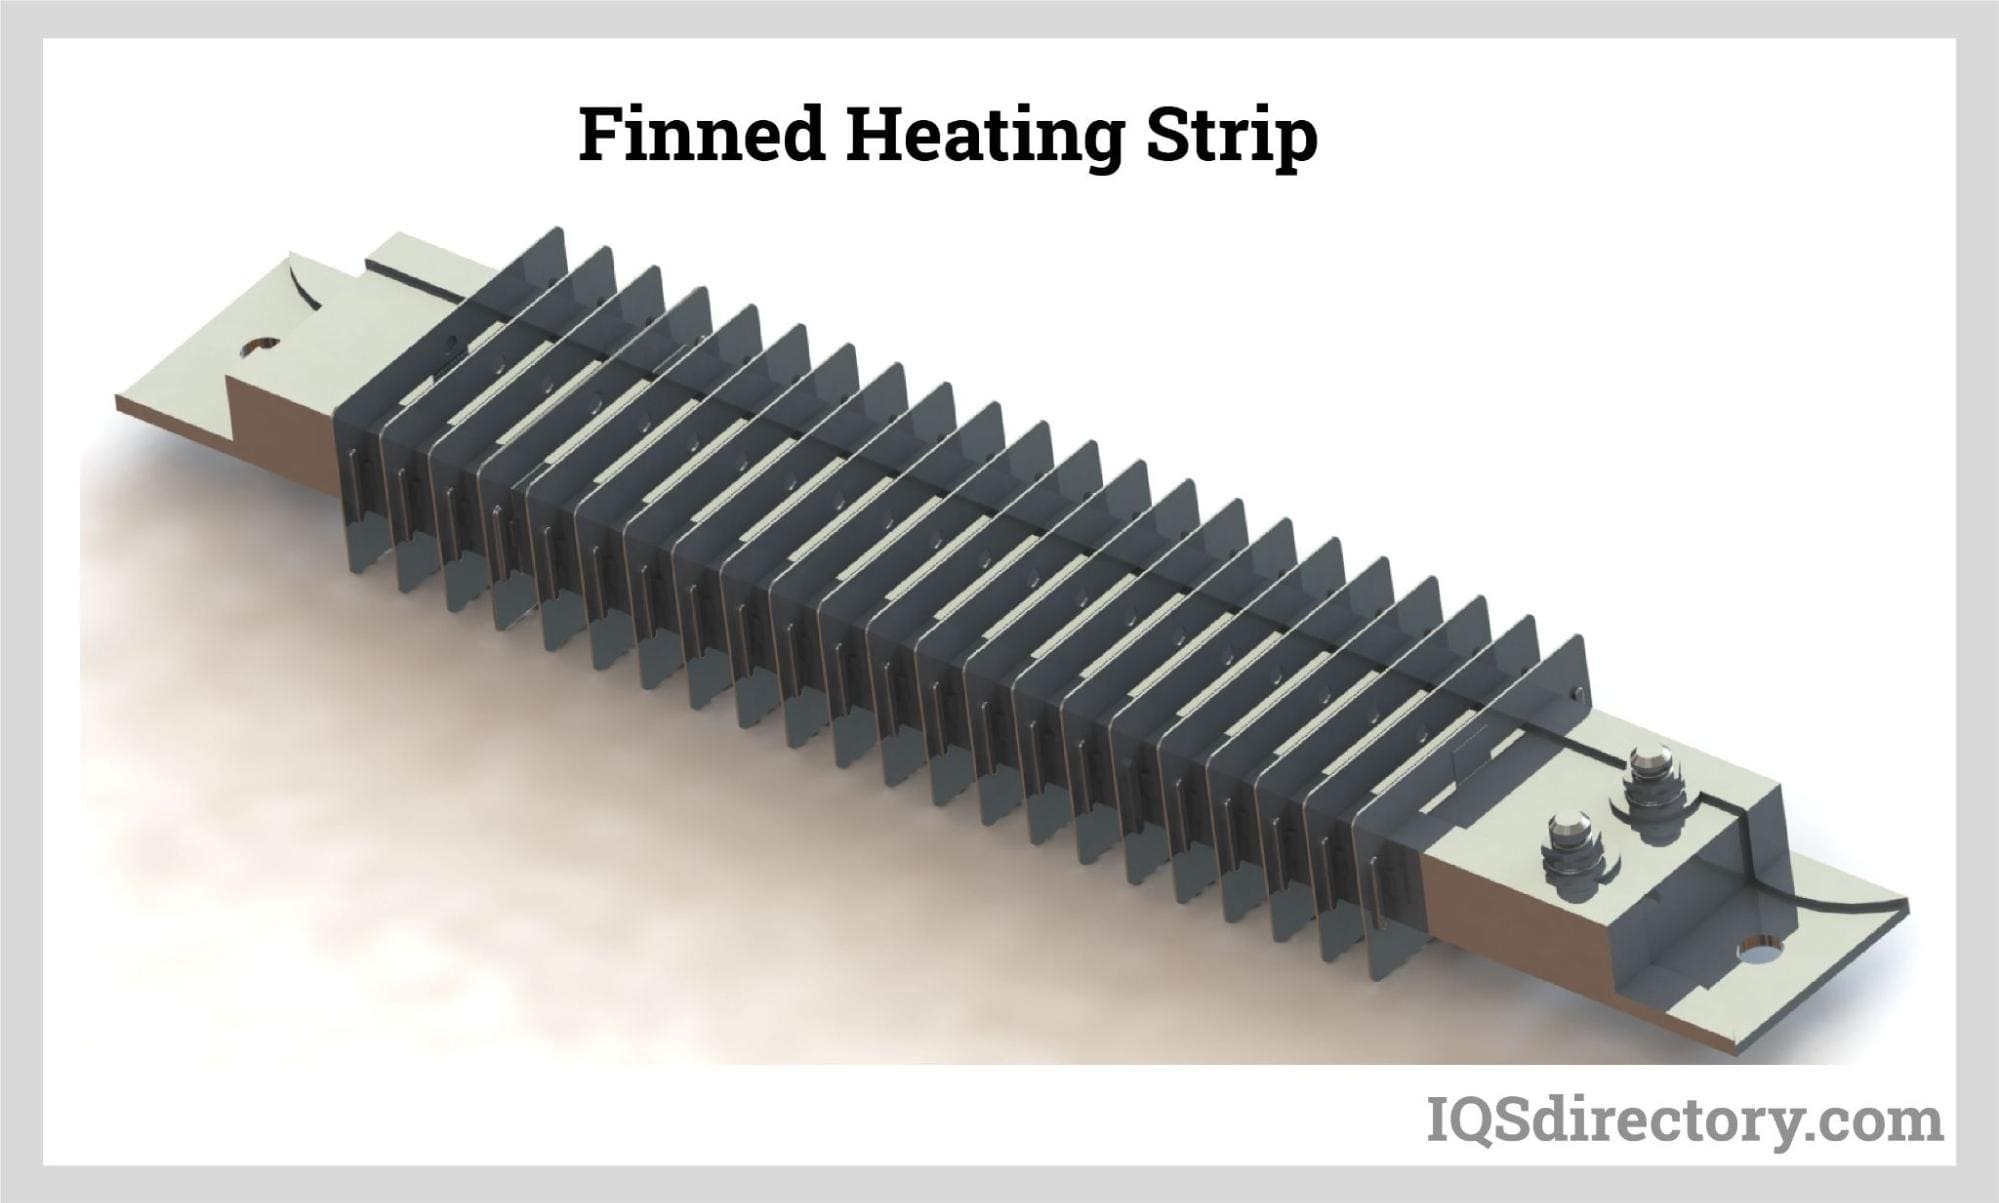 Finned Heating Strip